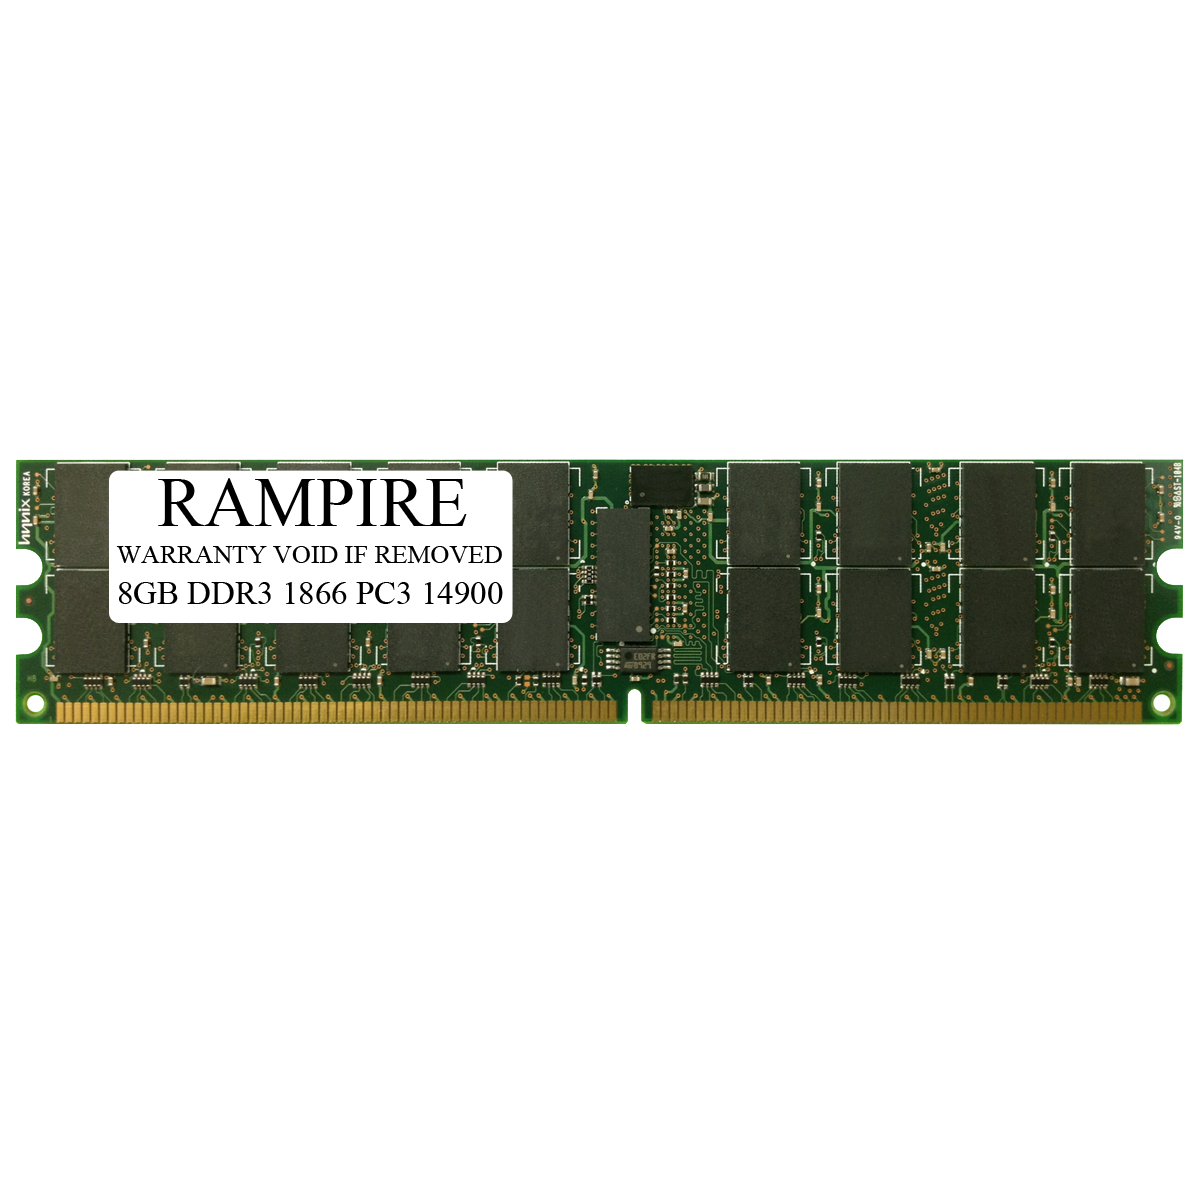 RAMPIRE 8GB DDR3 1866 (PC3 14900) 240-Pin SDRAM 1Rx8 Standard Profile 1.5V ECC Registered Server Memory